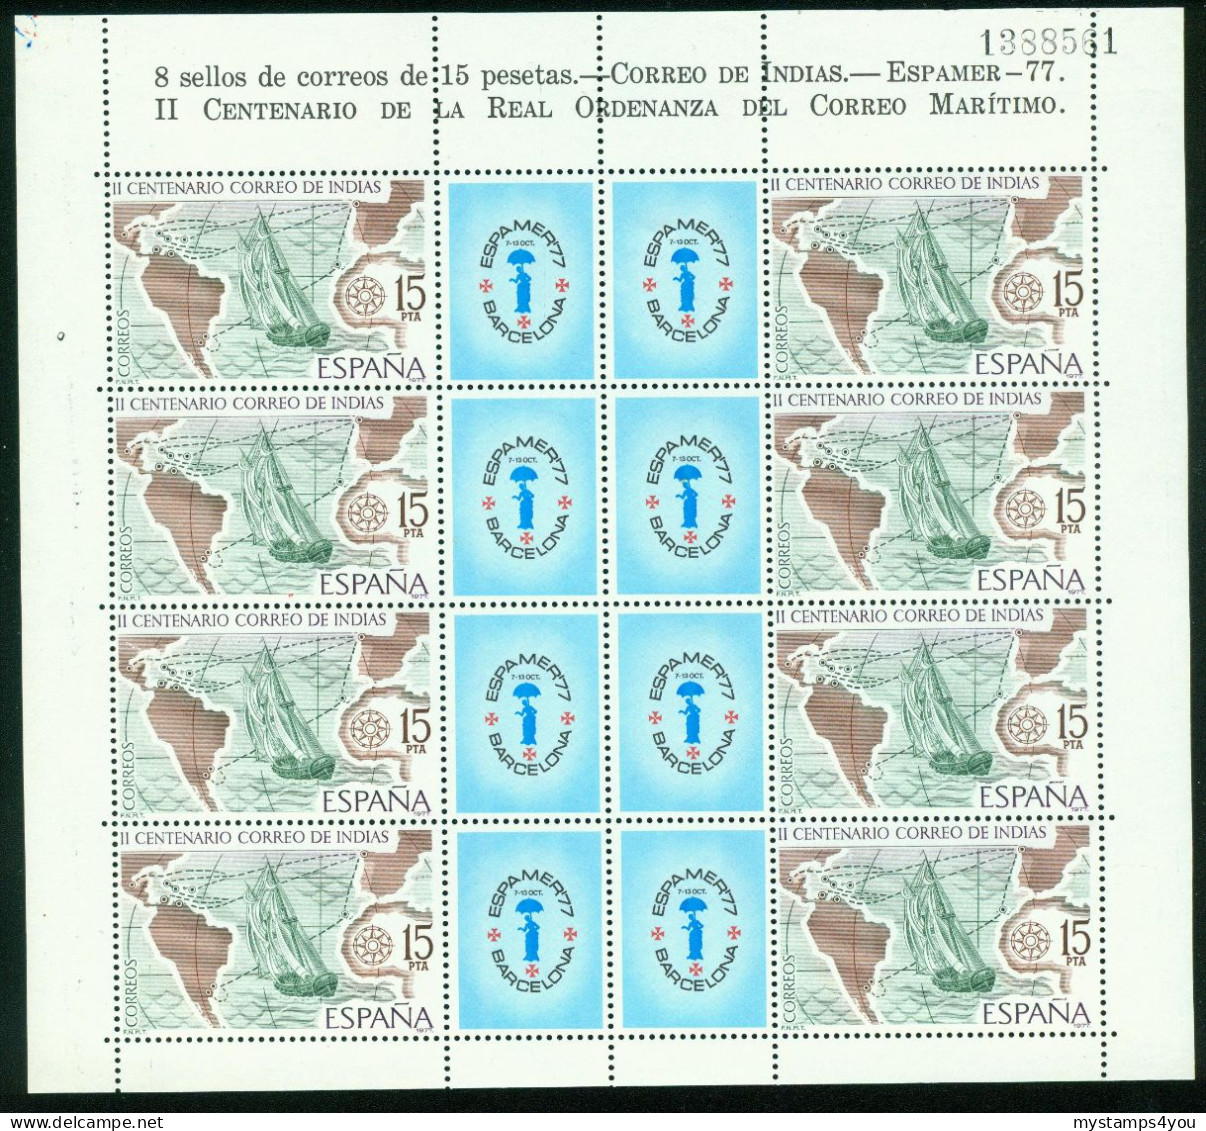 Bm Spain 1977 MiNr 2330 Kleinbogen Sheet MNH | Bicent Of Mail To The Indies. "Espamer 77" Stamp Exn Barcelona #bog-0134 - Blocks & Kleinbögen